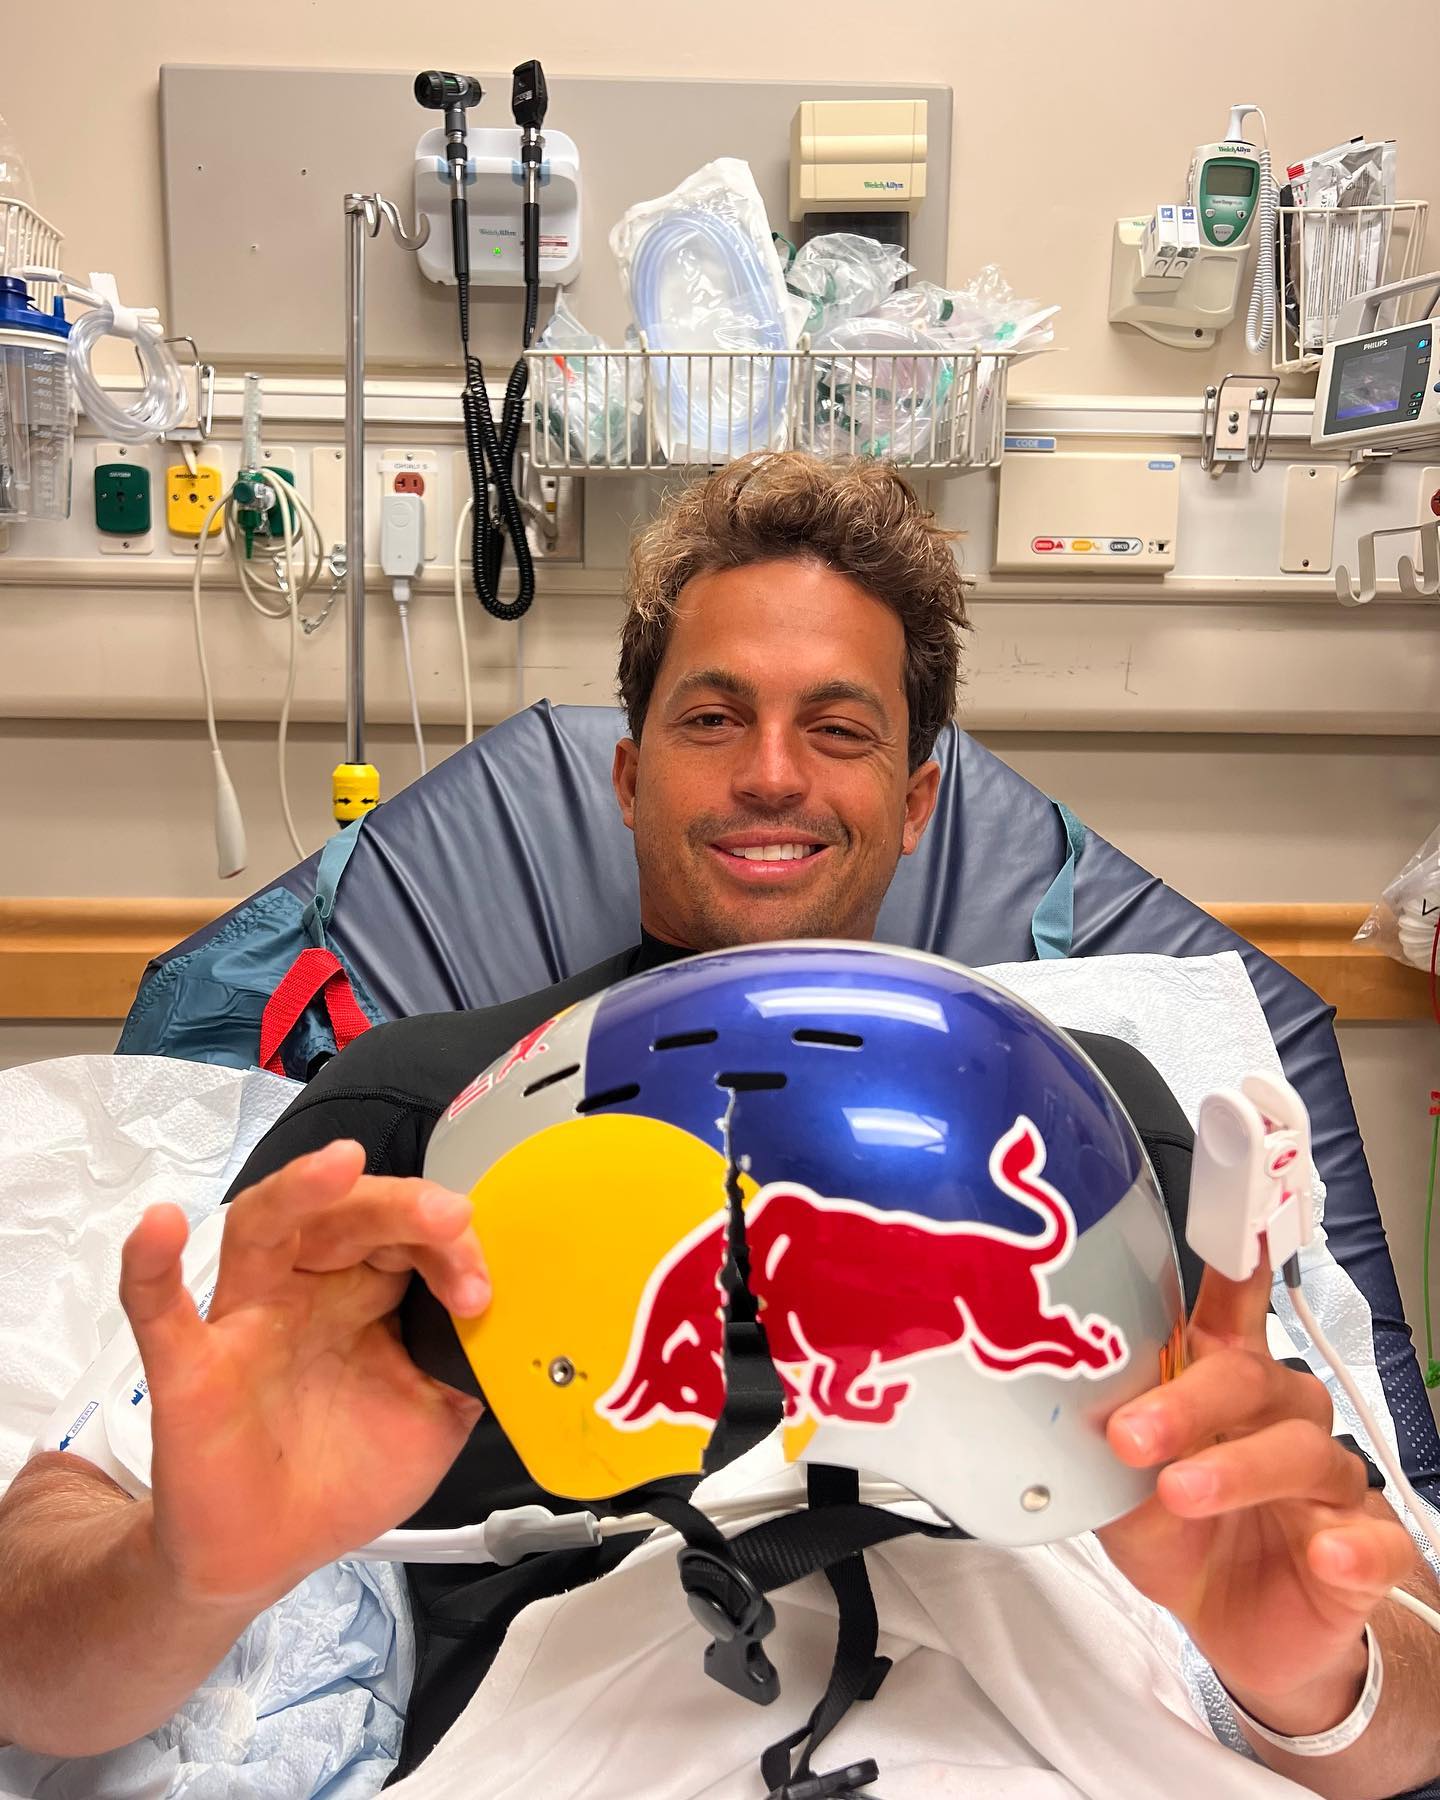 Kai Lenny w/helmet that saved his life